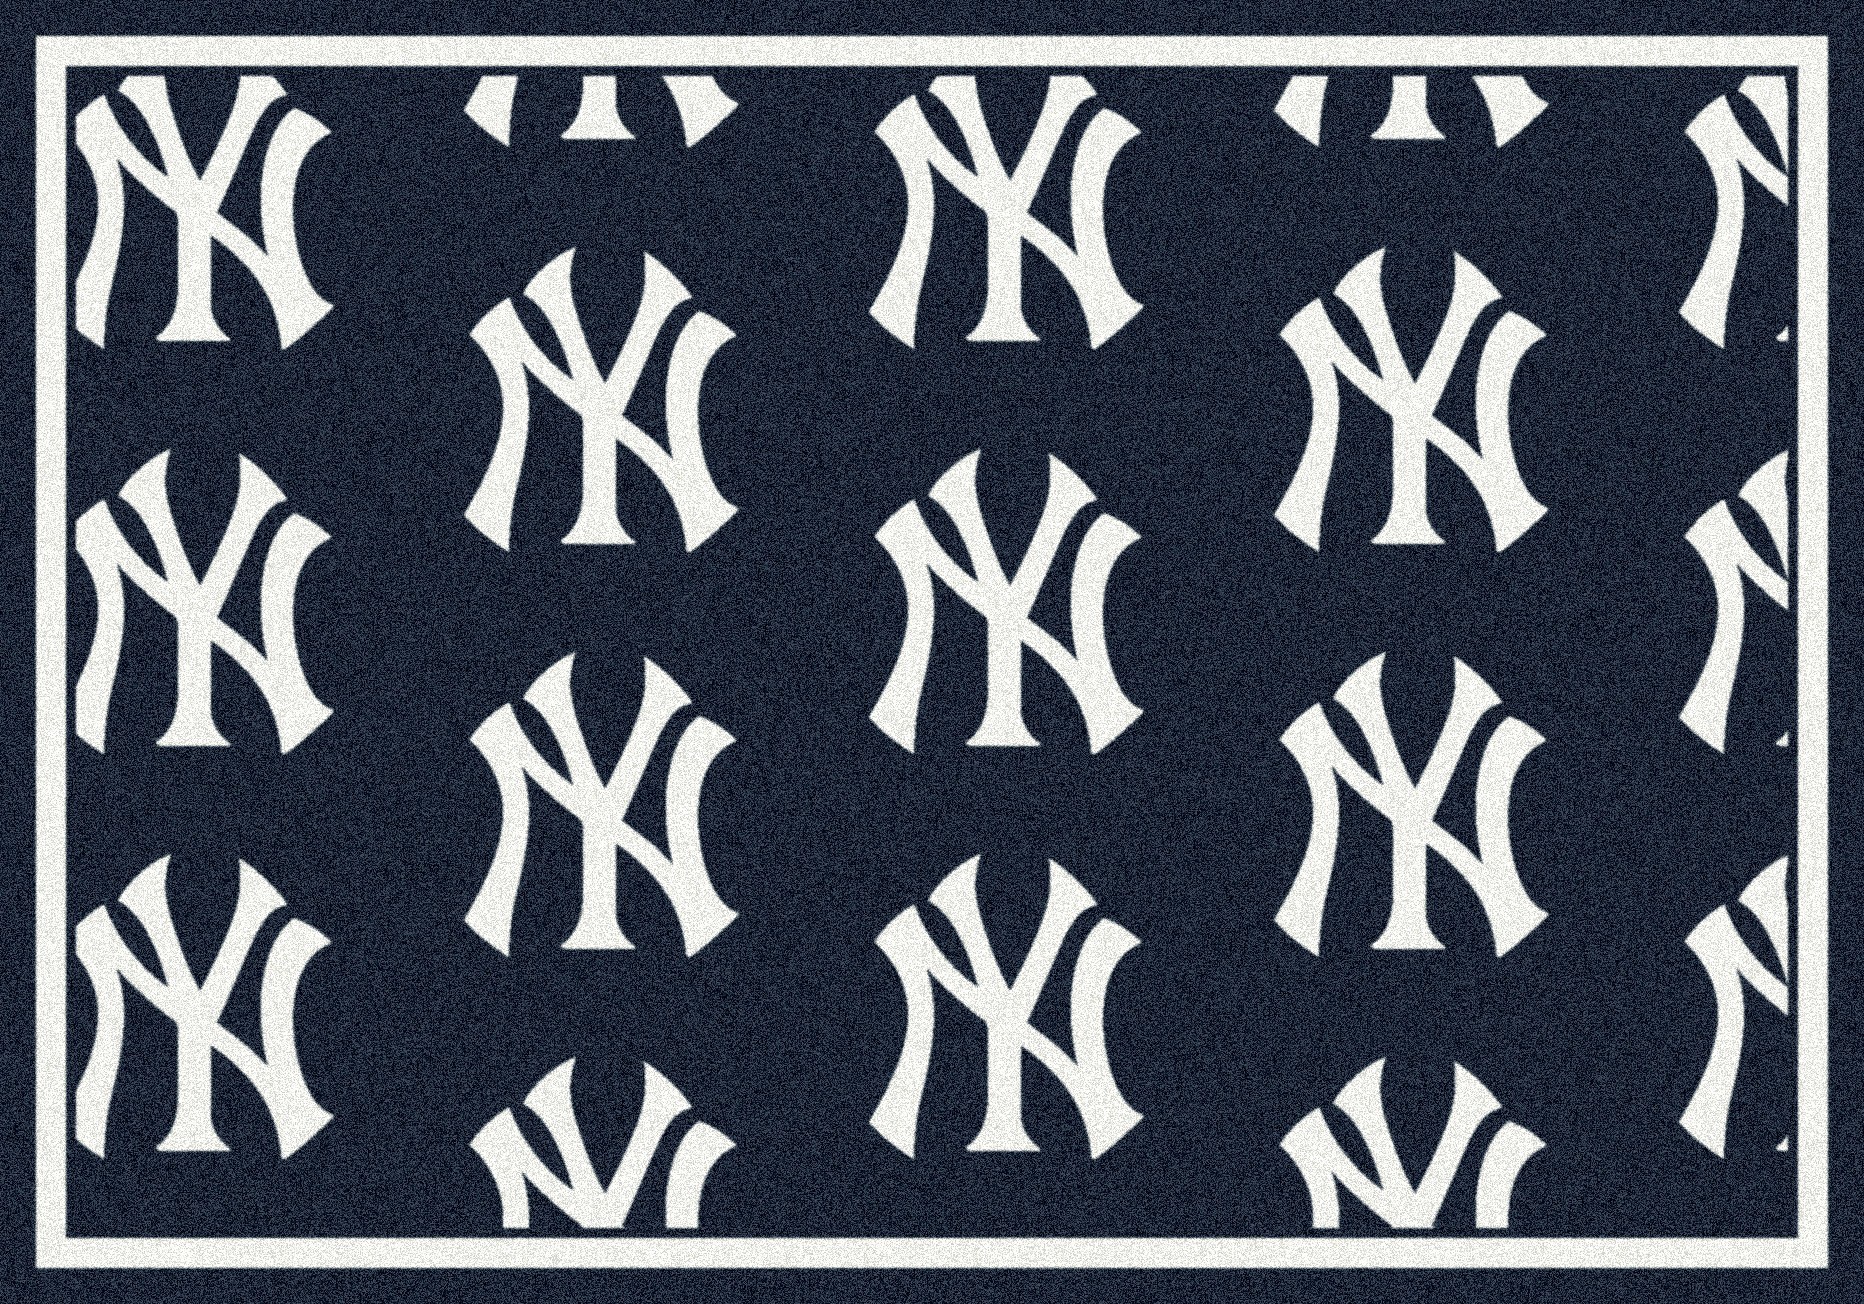 Pink Yankees Wallpaper New York Baseball Mlb